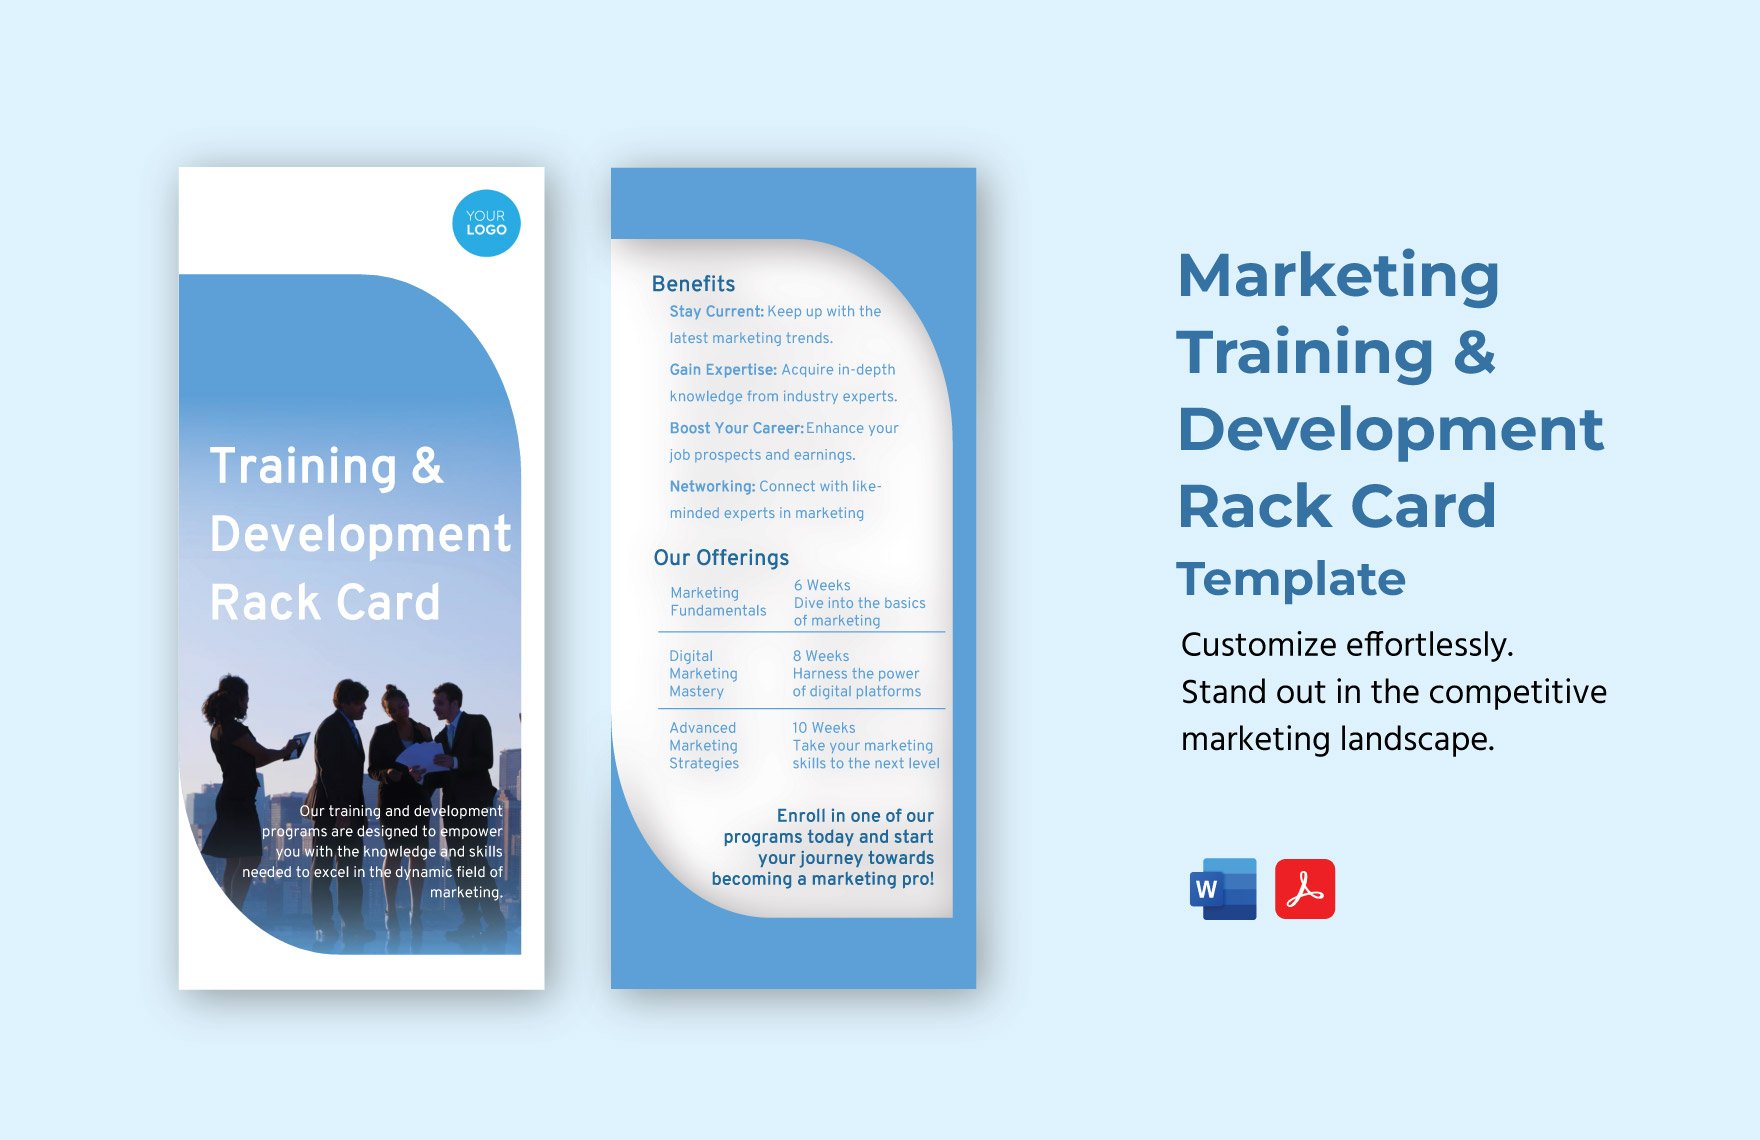 Marketing Training & Development Rack Card Template